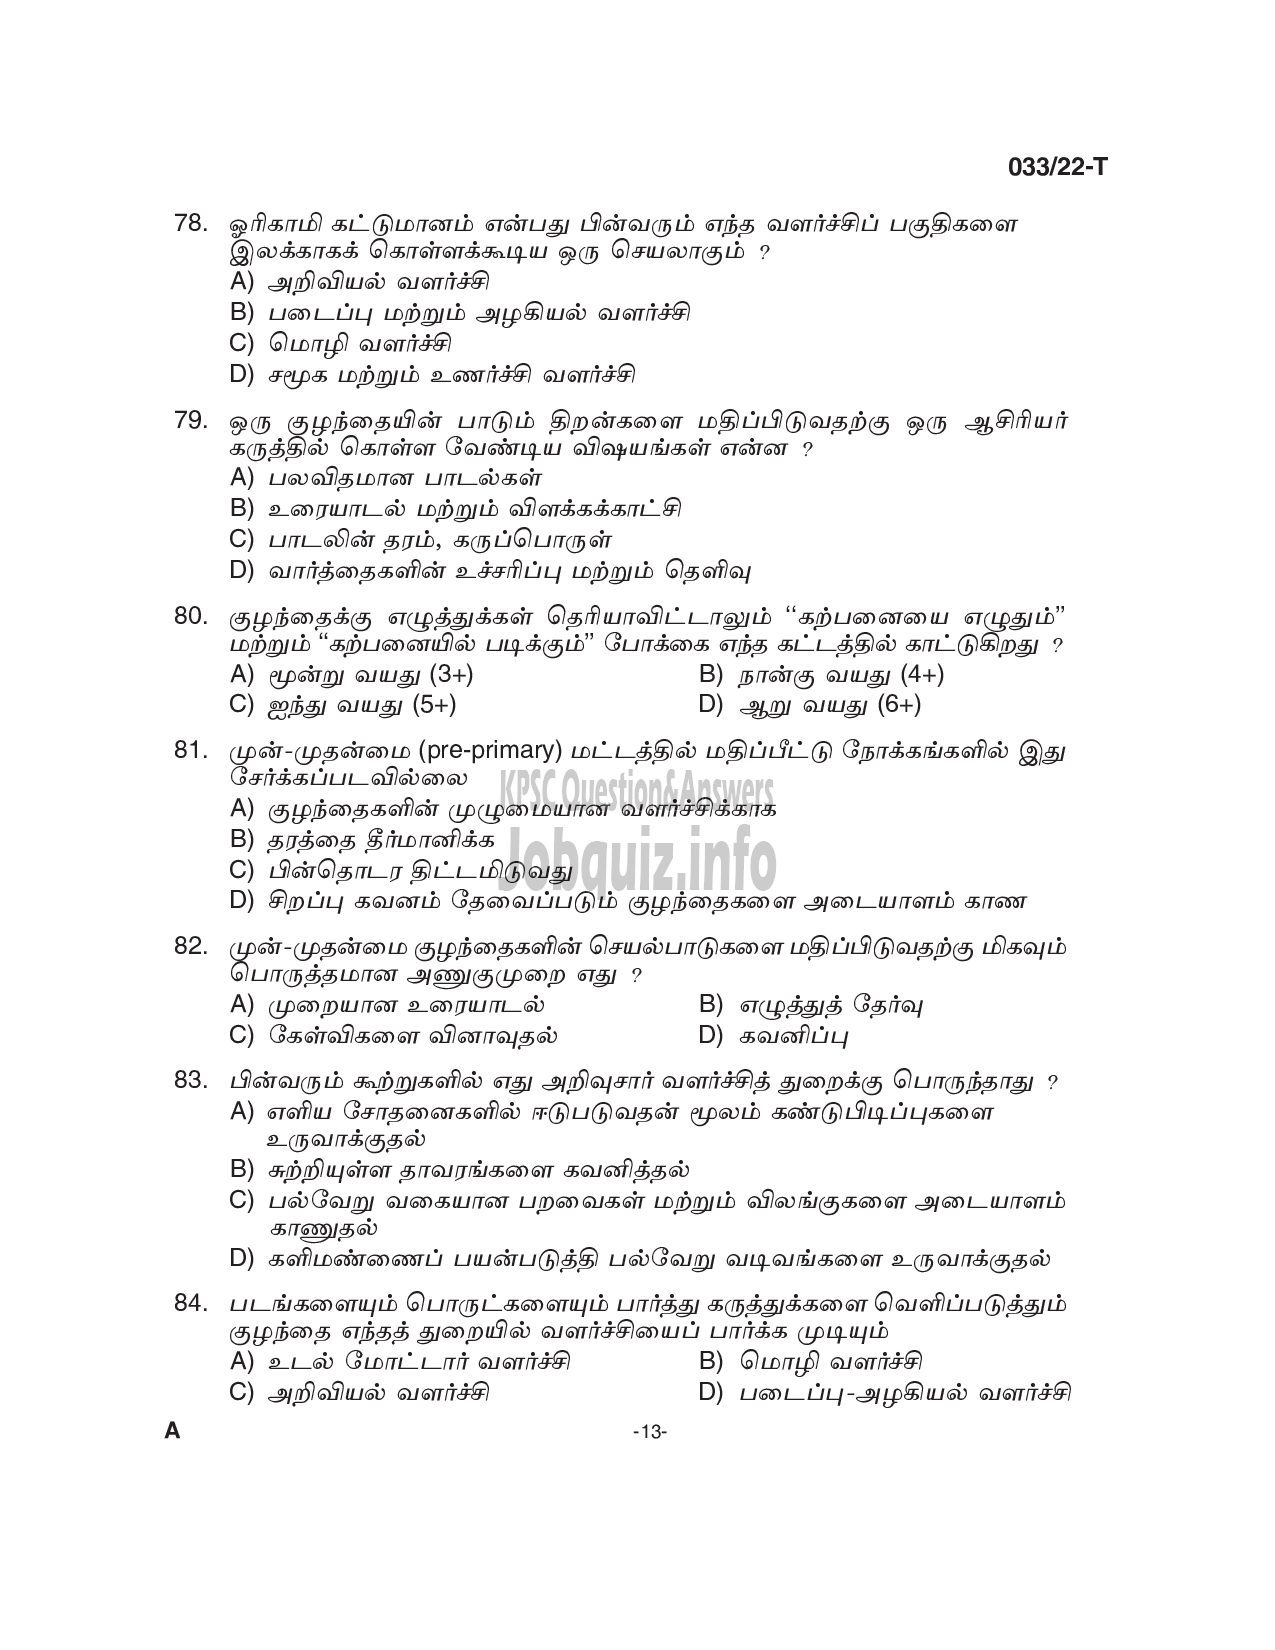 Kerala PSC Question Paper - Pre - Primary Teacher (Pre- Primary School) - Education -13